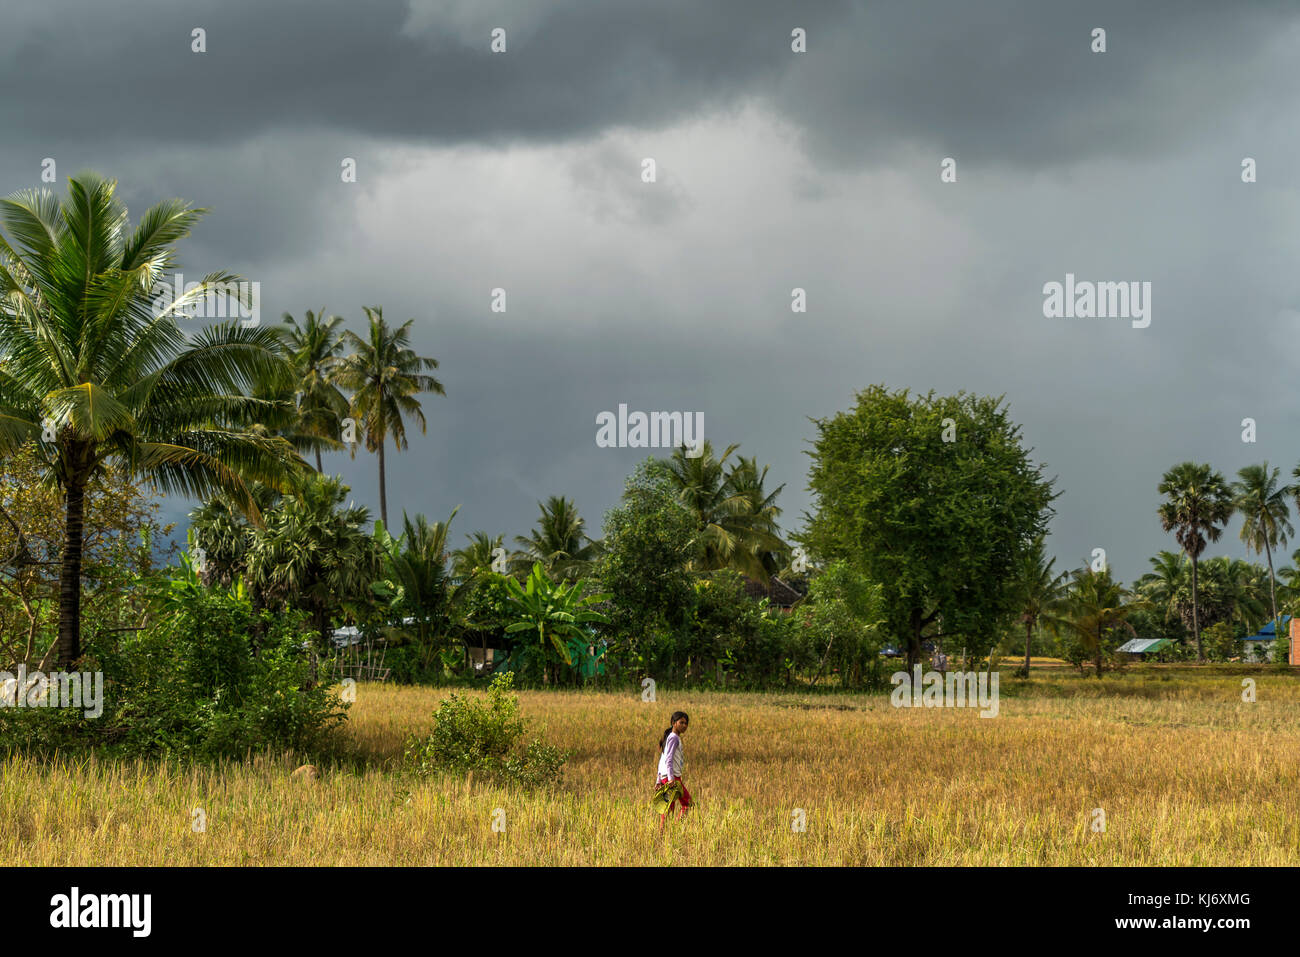 Frauen bei der reisernte auf dem feld bei kampot, kambodscha, asien | le donne la mietitura del riso nei campi, Kampot, Cambogia, asia Foto Stock